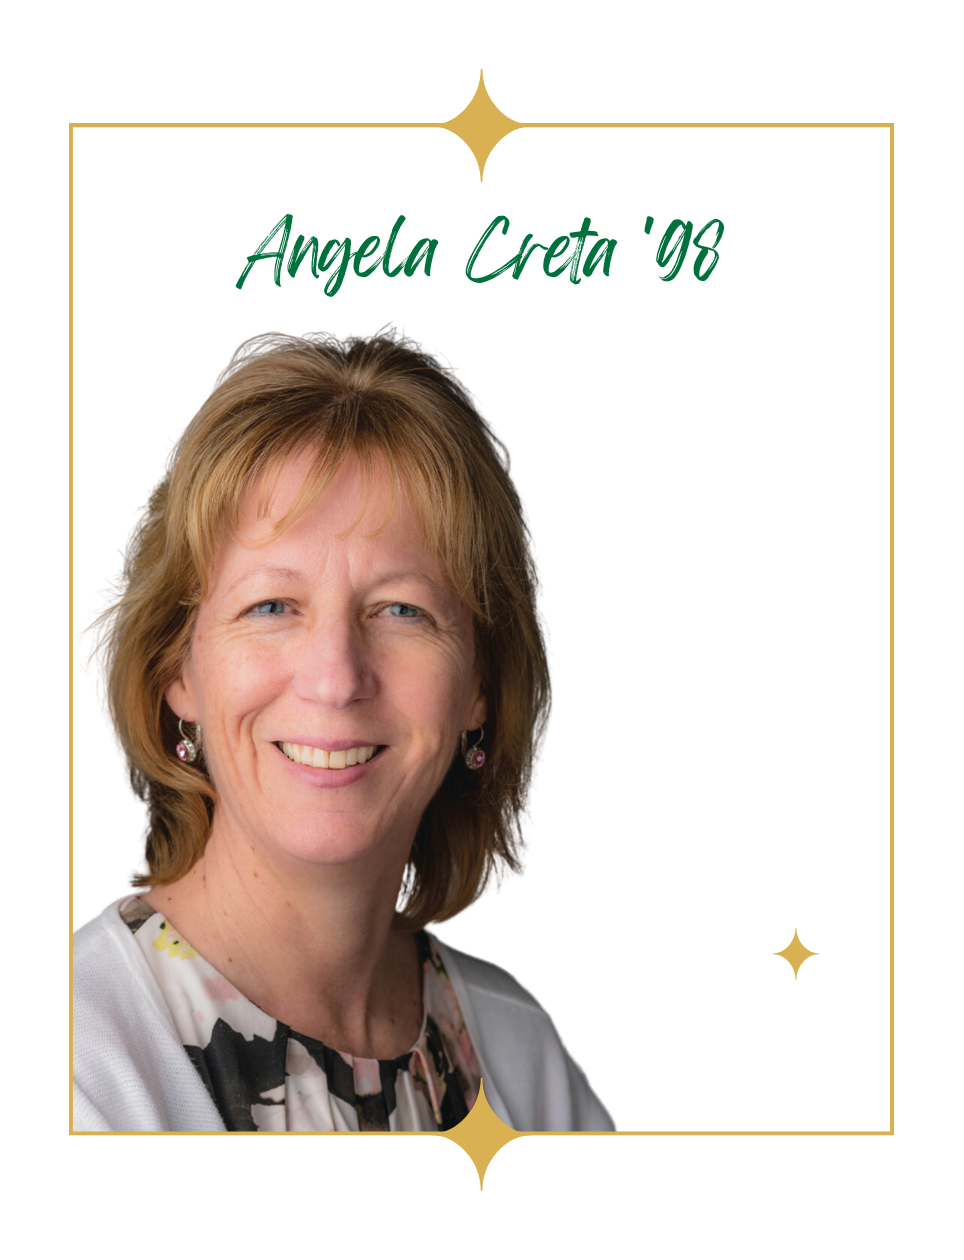 Angela Creta '98